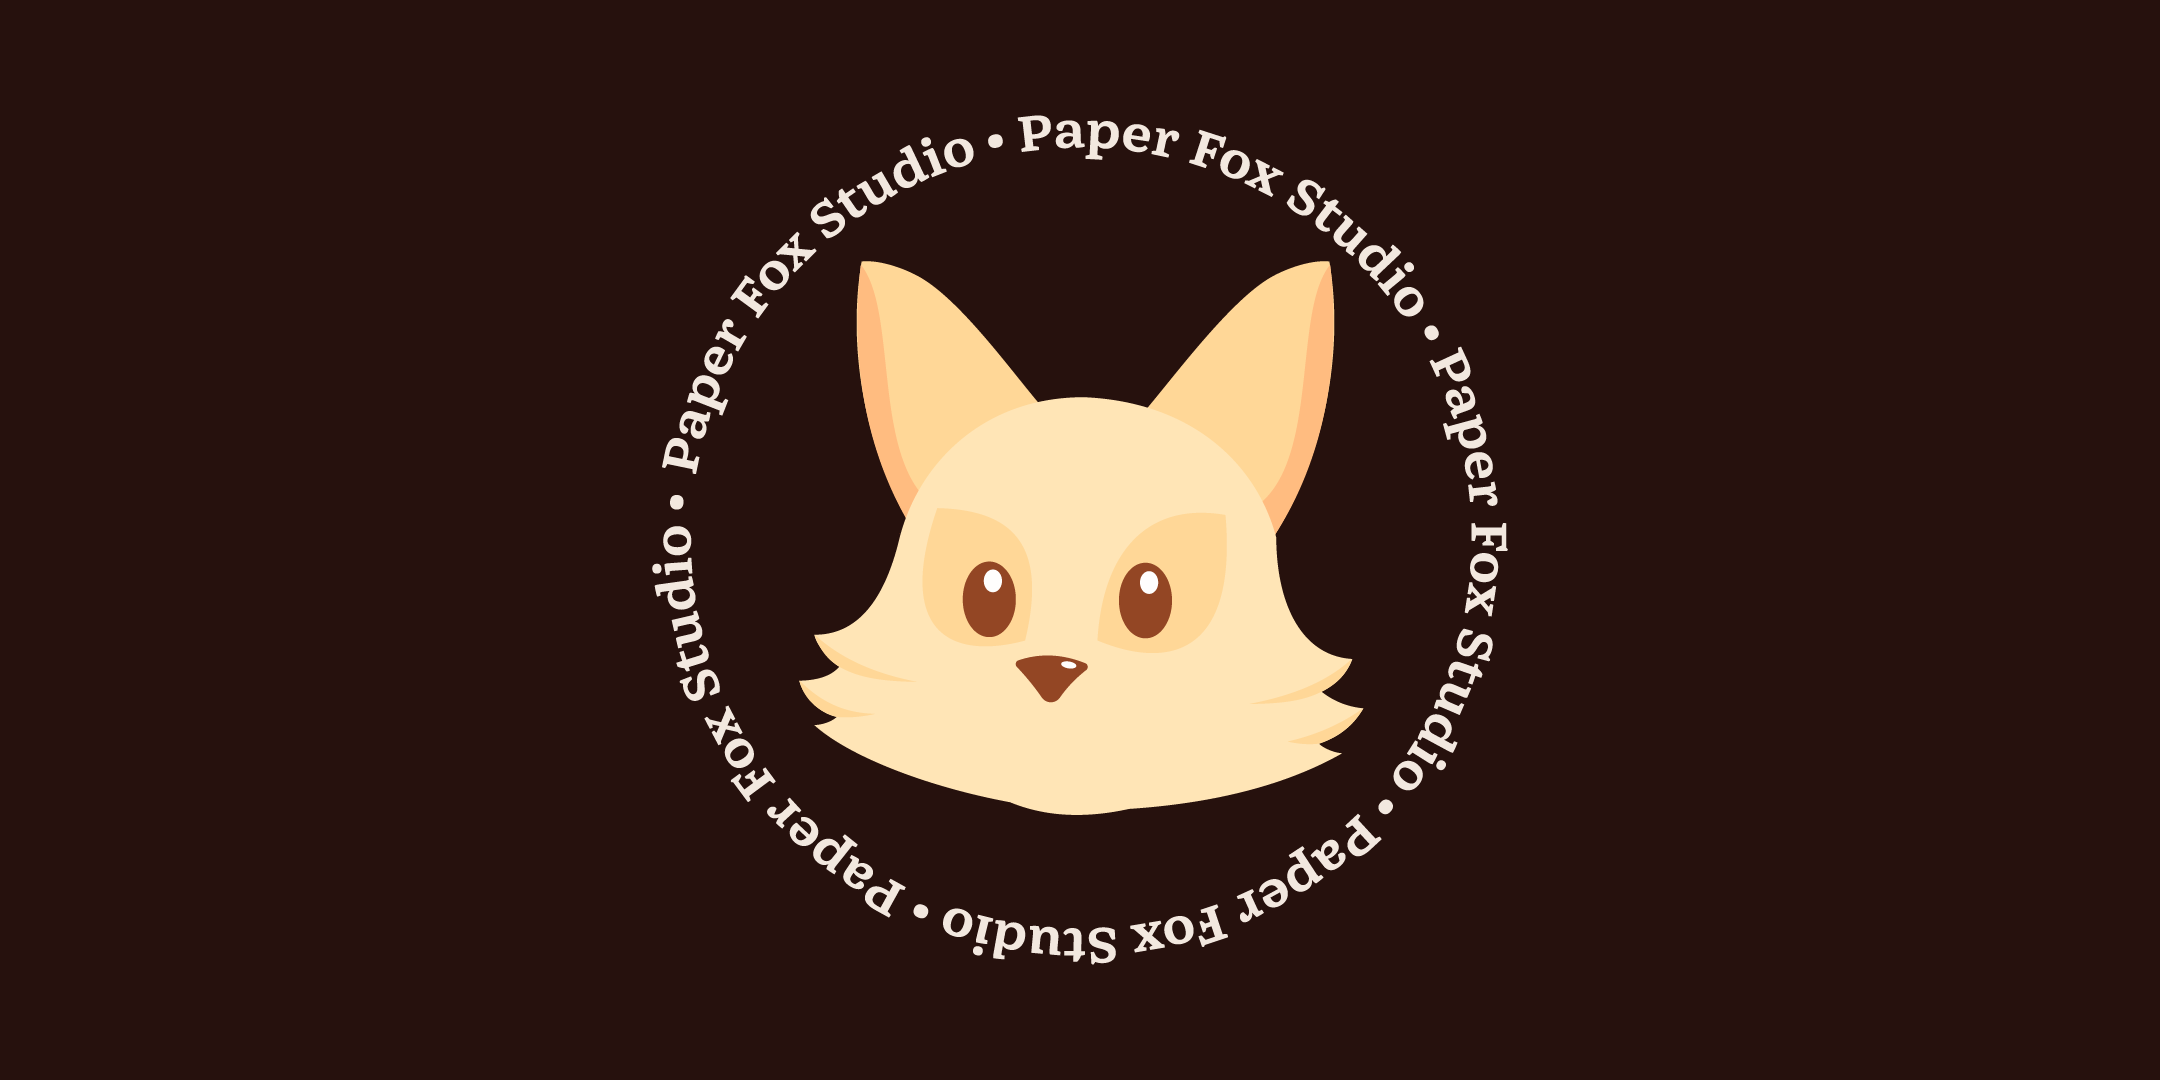 Paper Fox Studio